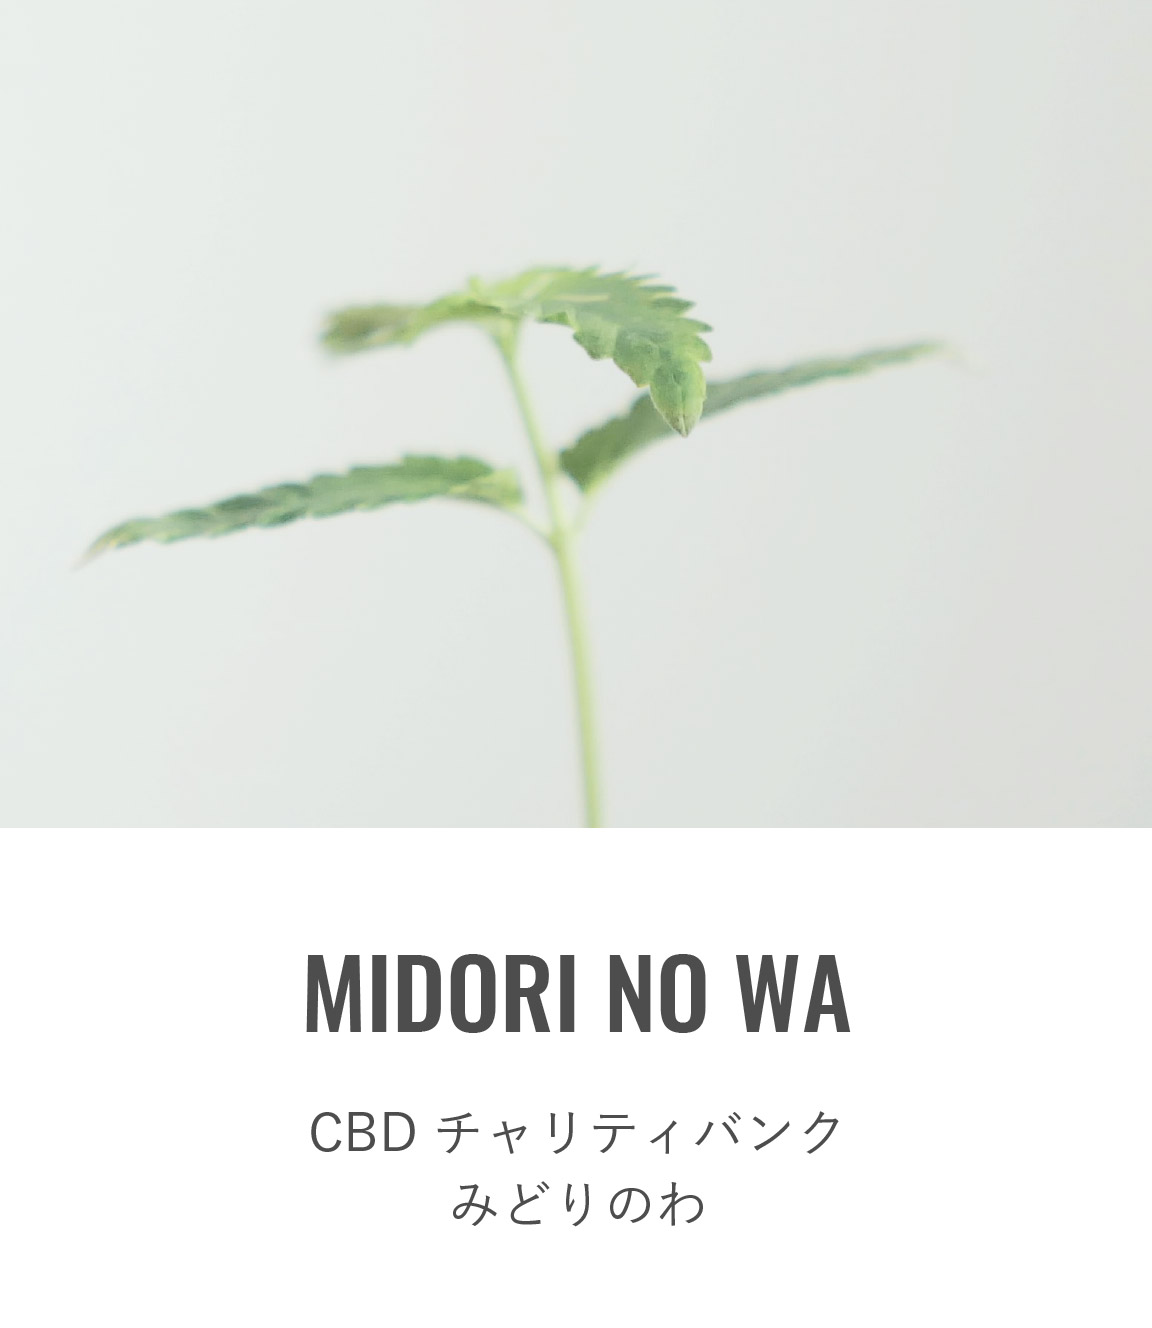 MIDORI NO WA - CBD チャリティバンク みどりのわ